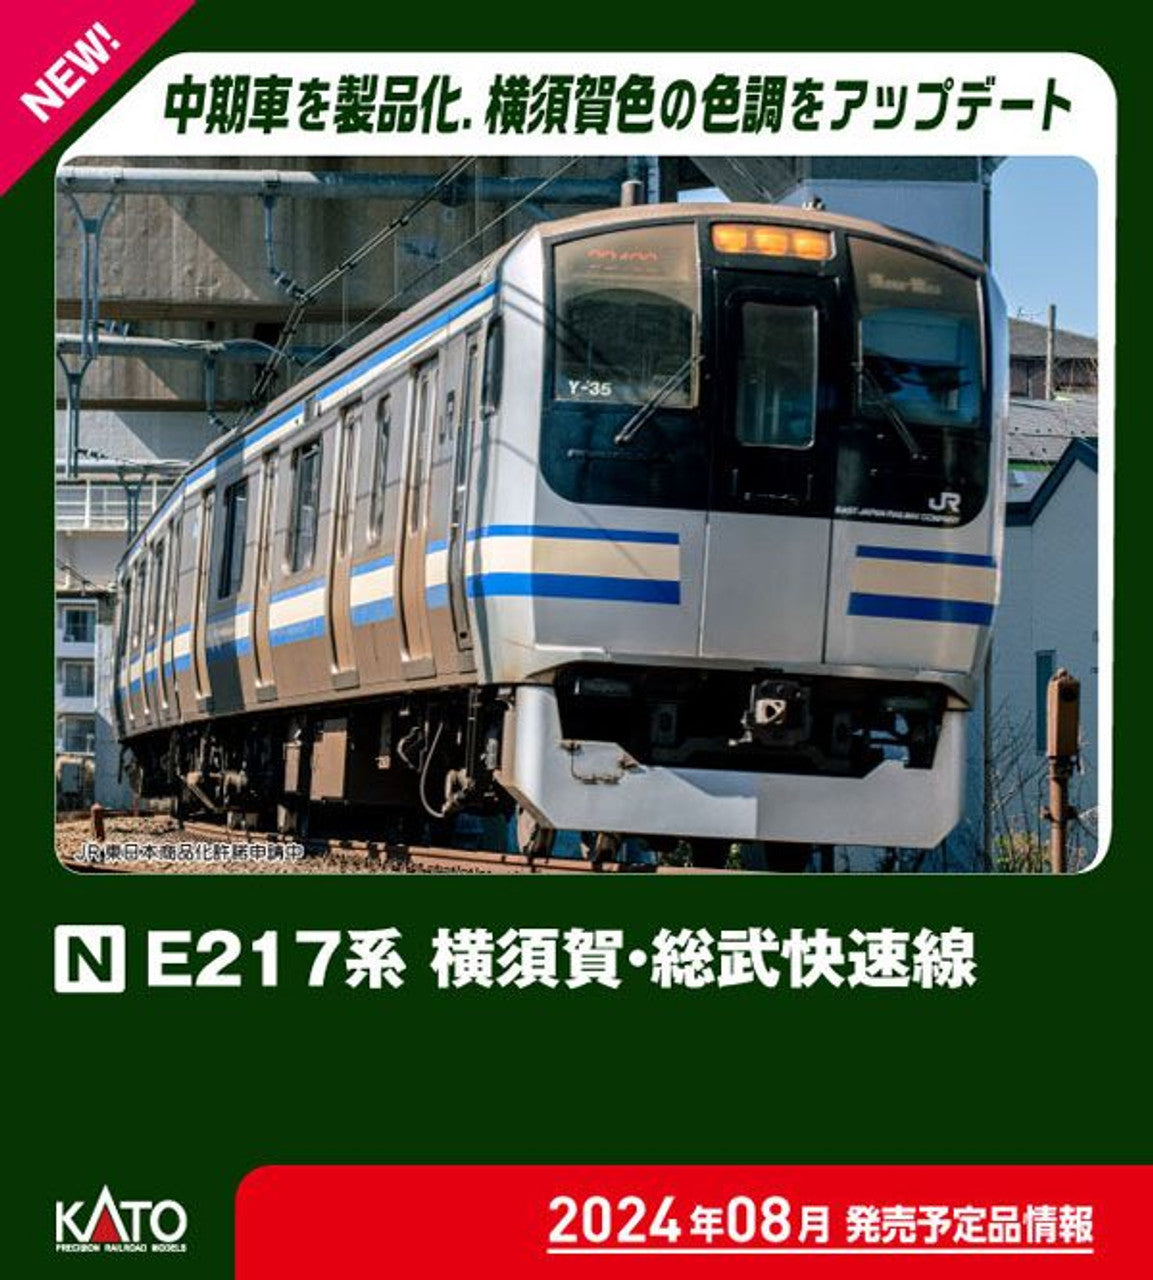 Kato [PO AUG 204] 10-1977 Series E217 Yokosuka/Sobu Rapid Line 8 Cars Set (N scale)